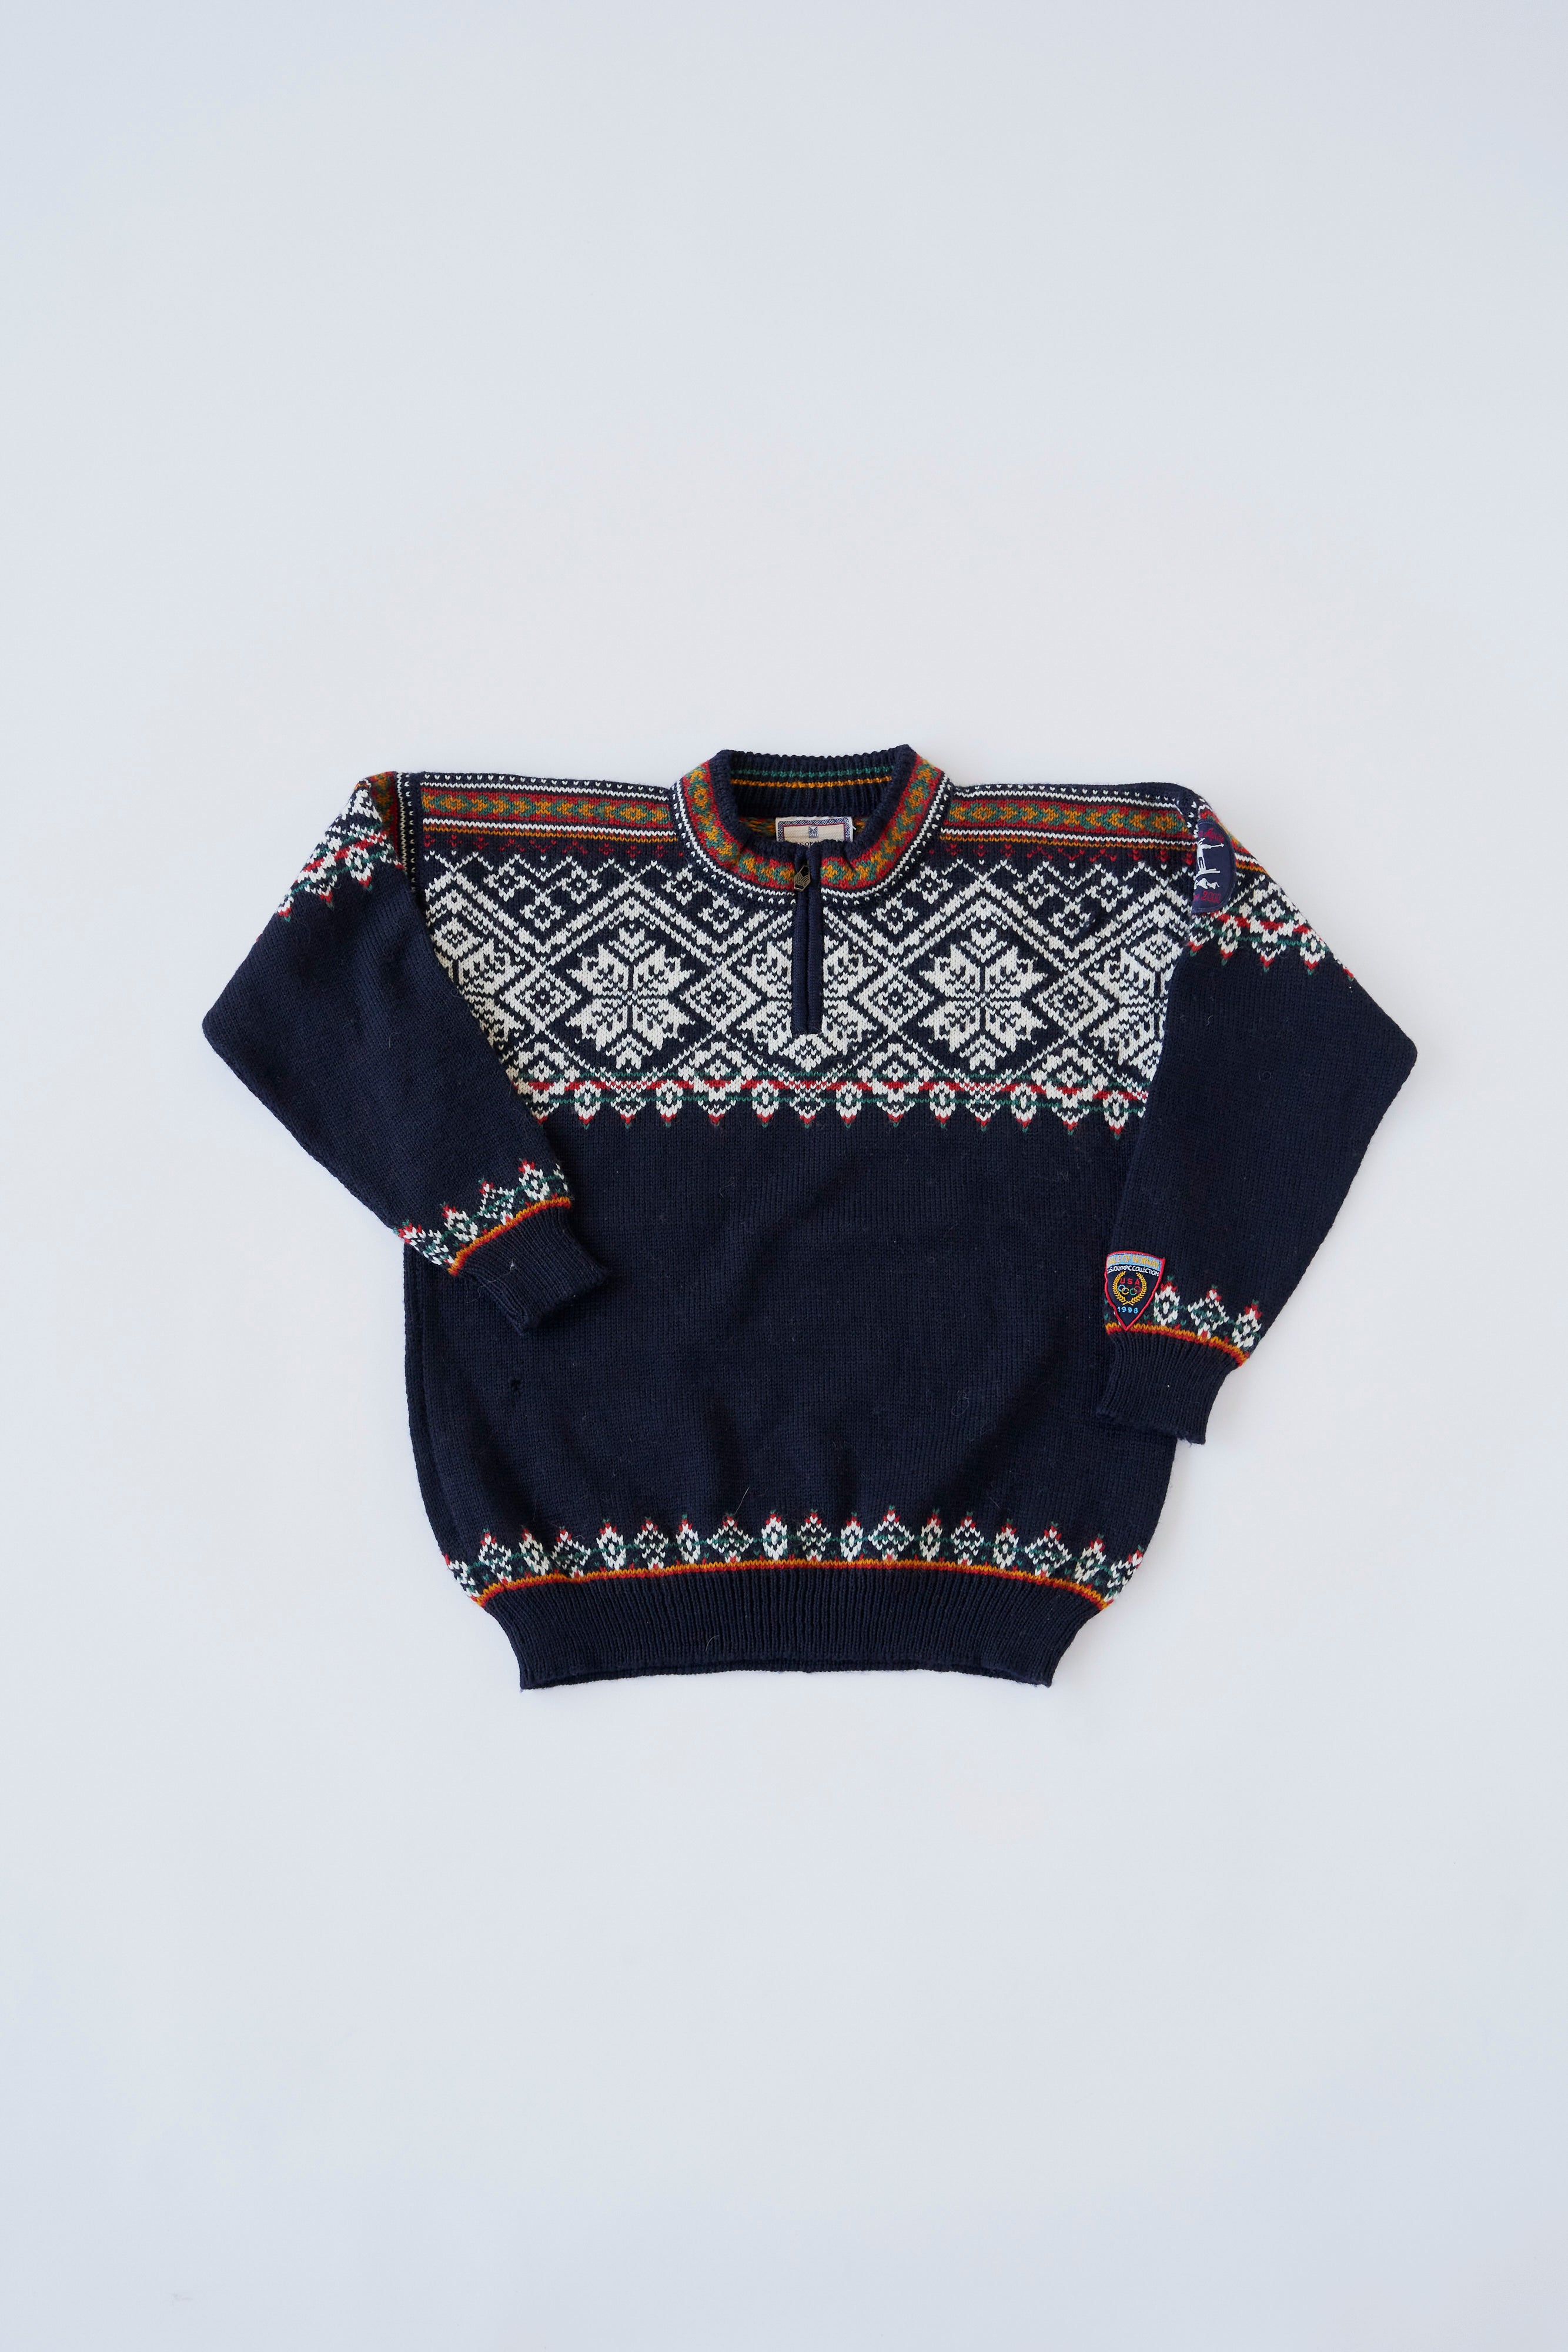 Vintage /  DALE OF NORWAY ノルディックセーター